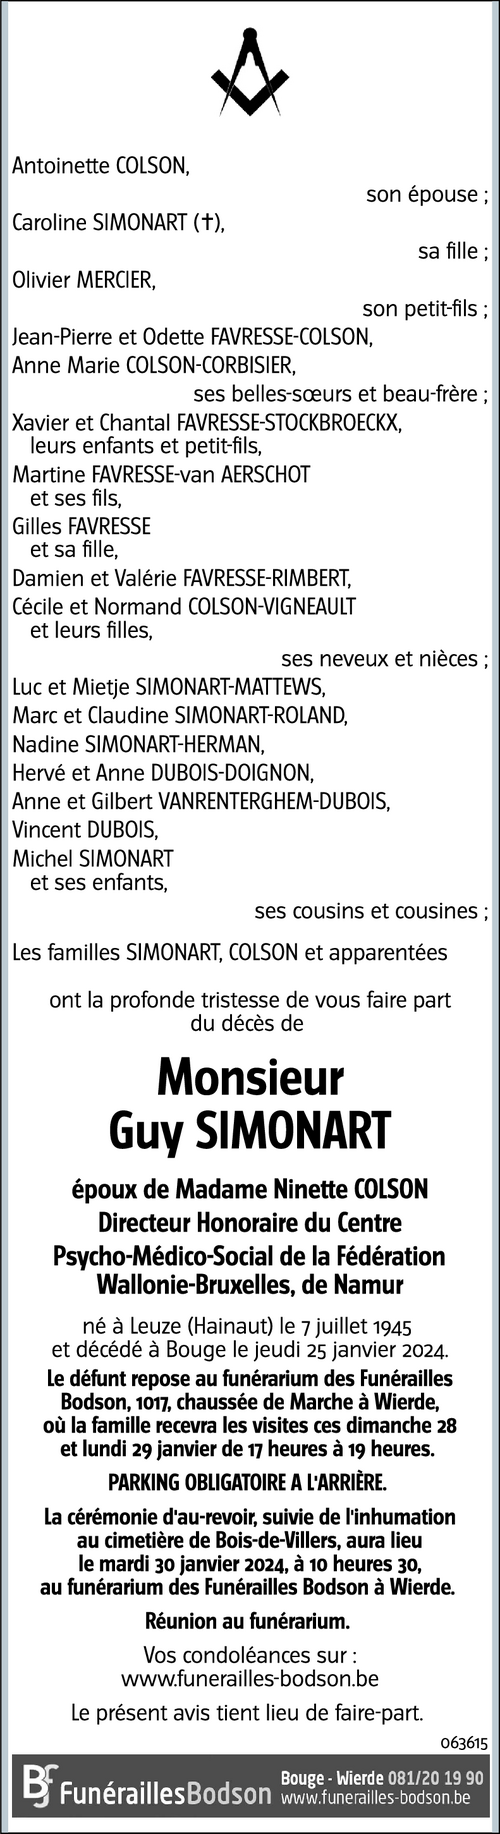 Guy SIMONART